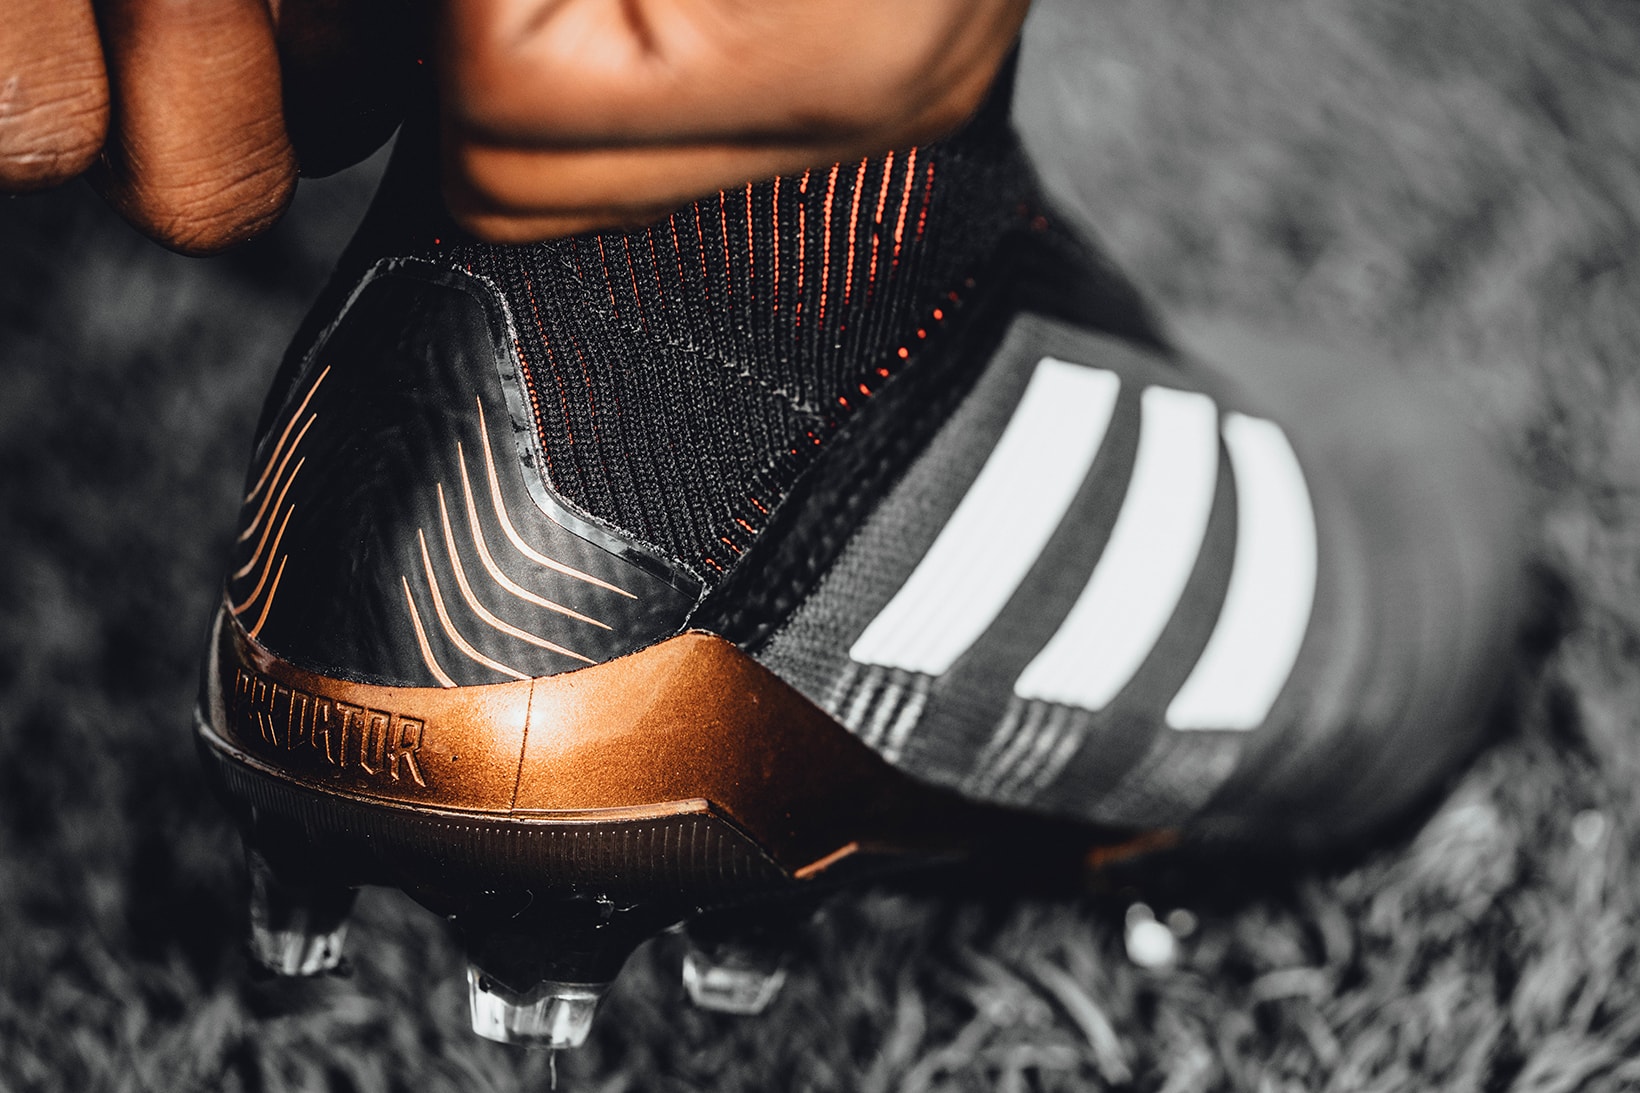 adidas Soccer Predator 18+ Stadium Cage Street Cleats Football Boots BOOST Paul Pogba Mesut Ozil Dele Alli